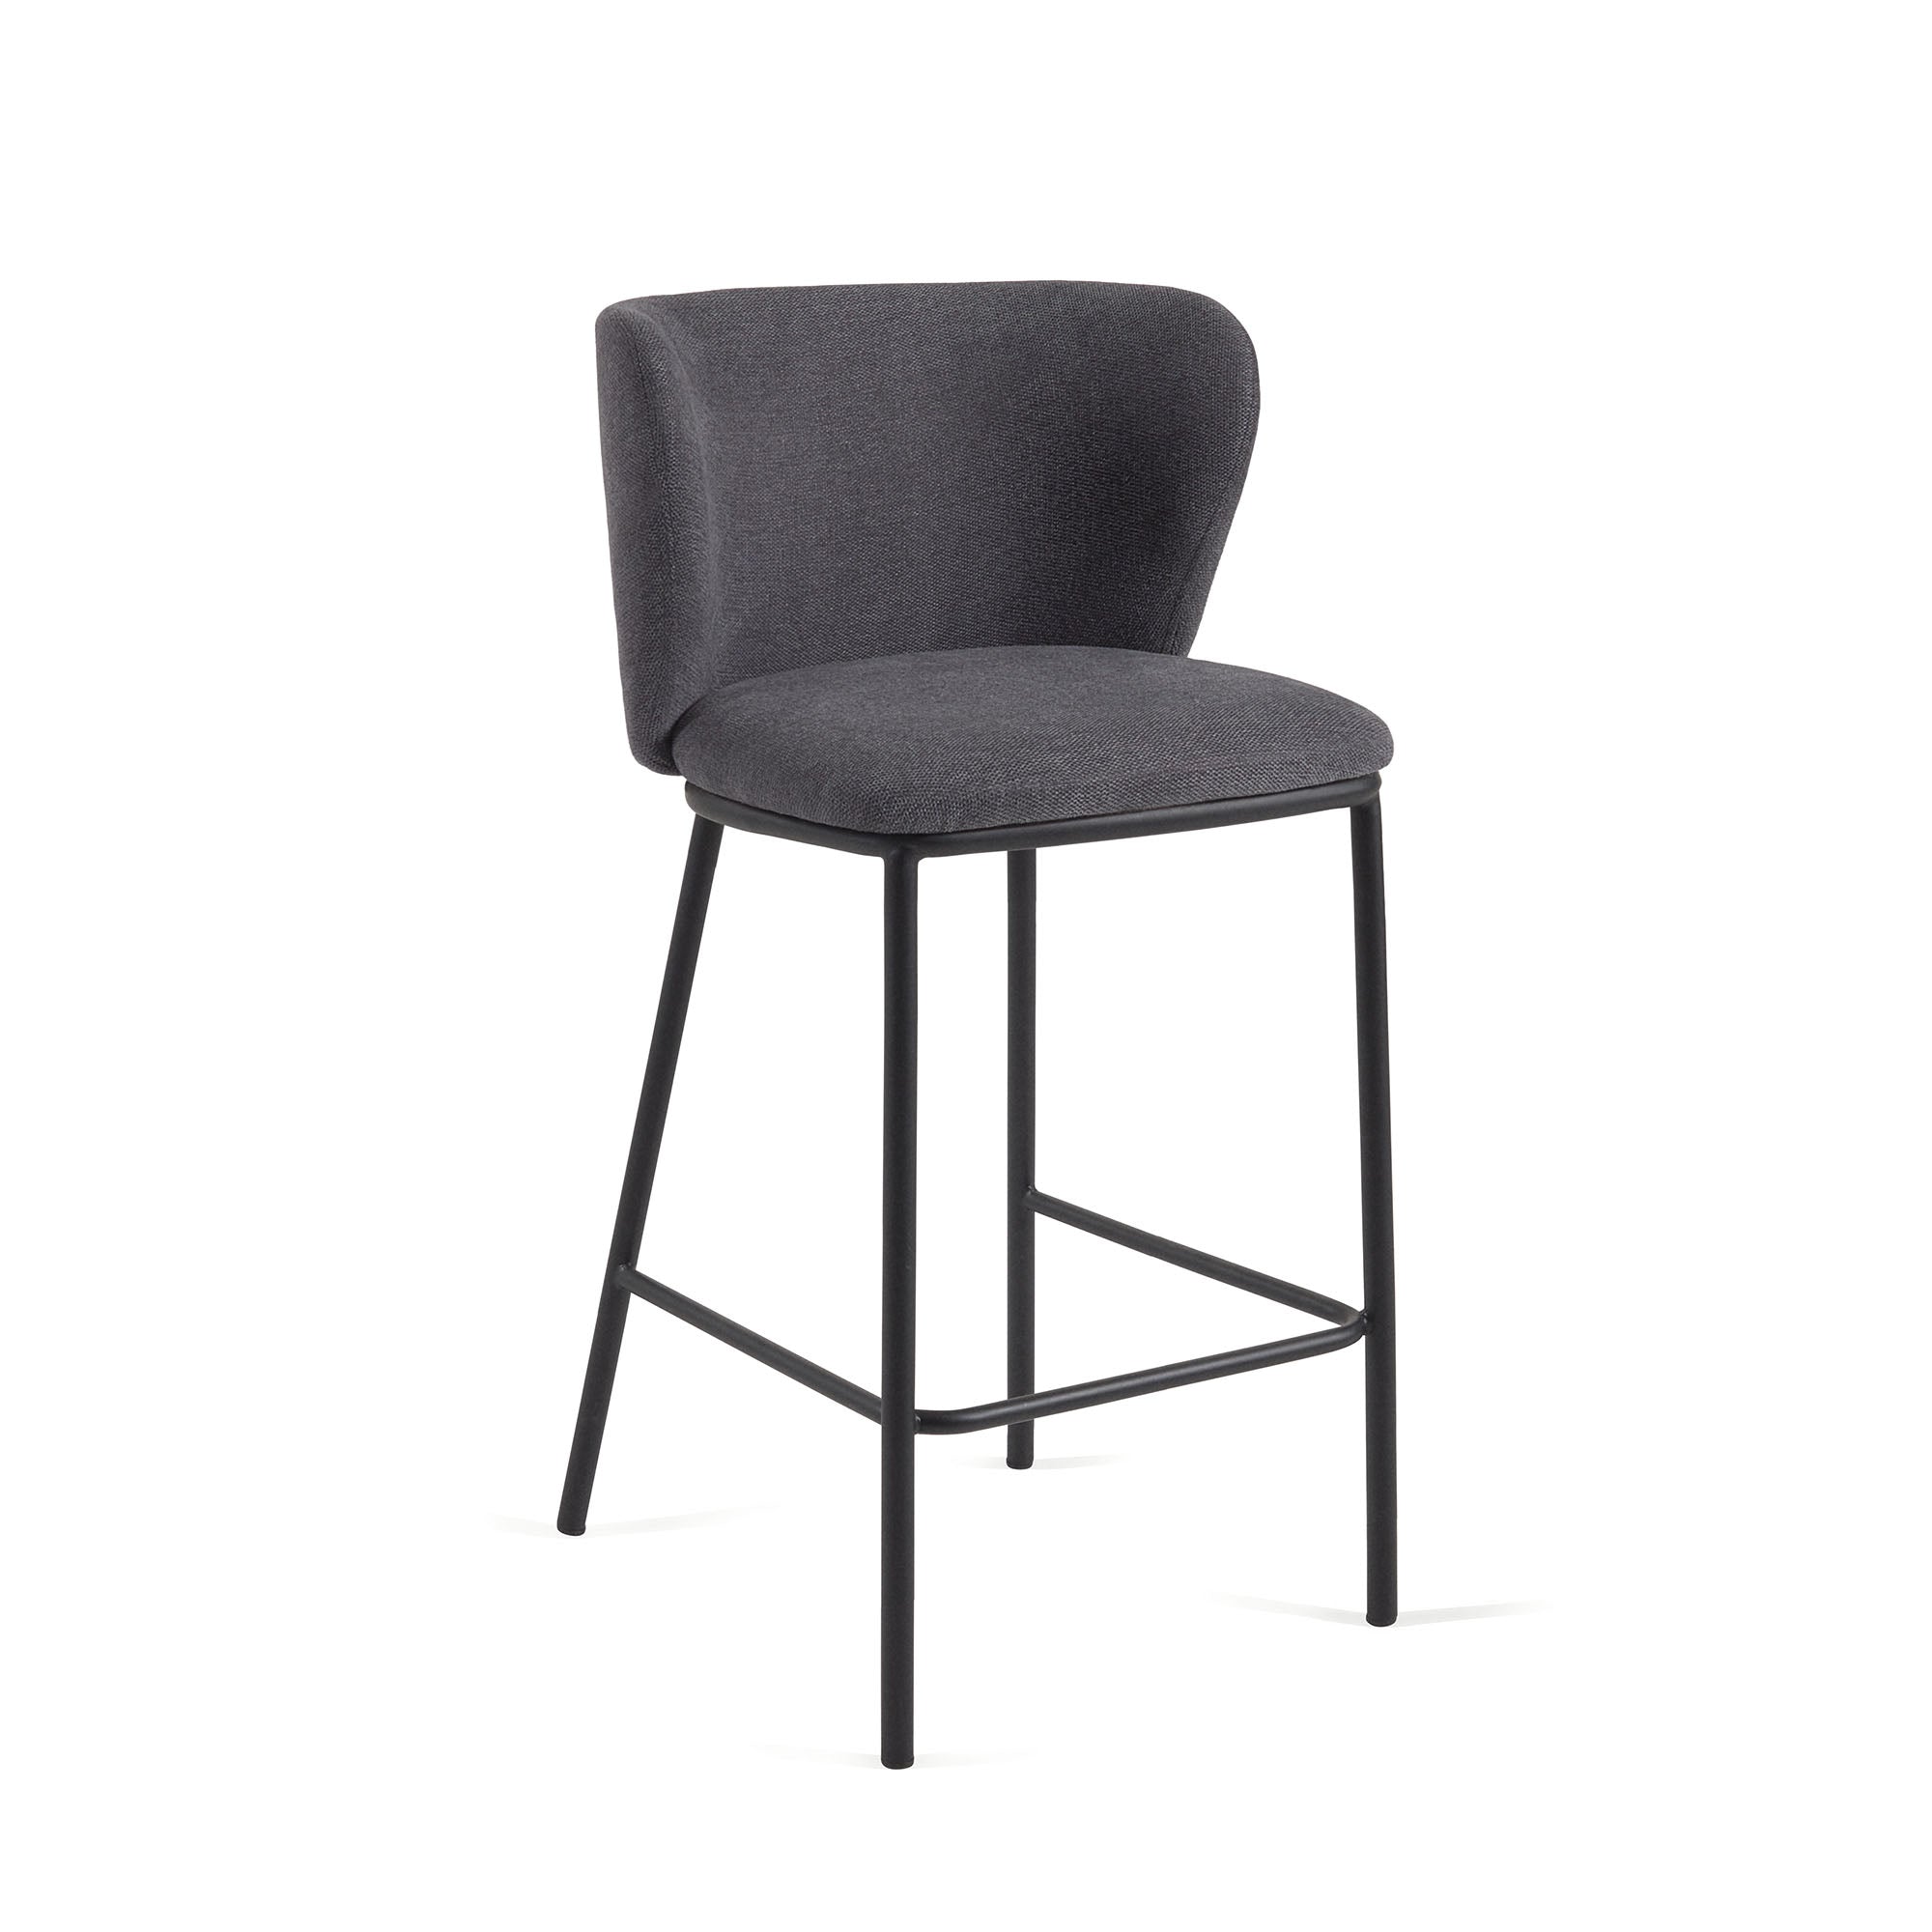 Ciselia stool in dark grey chenille with steel legs in black finish, 65 cm height